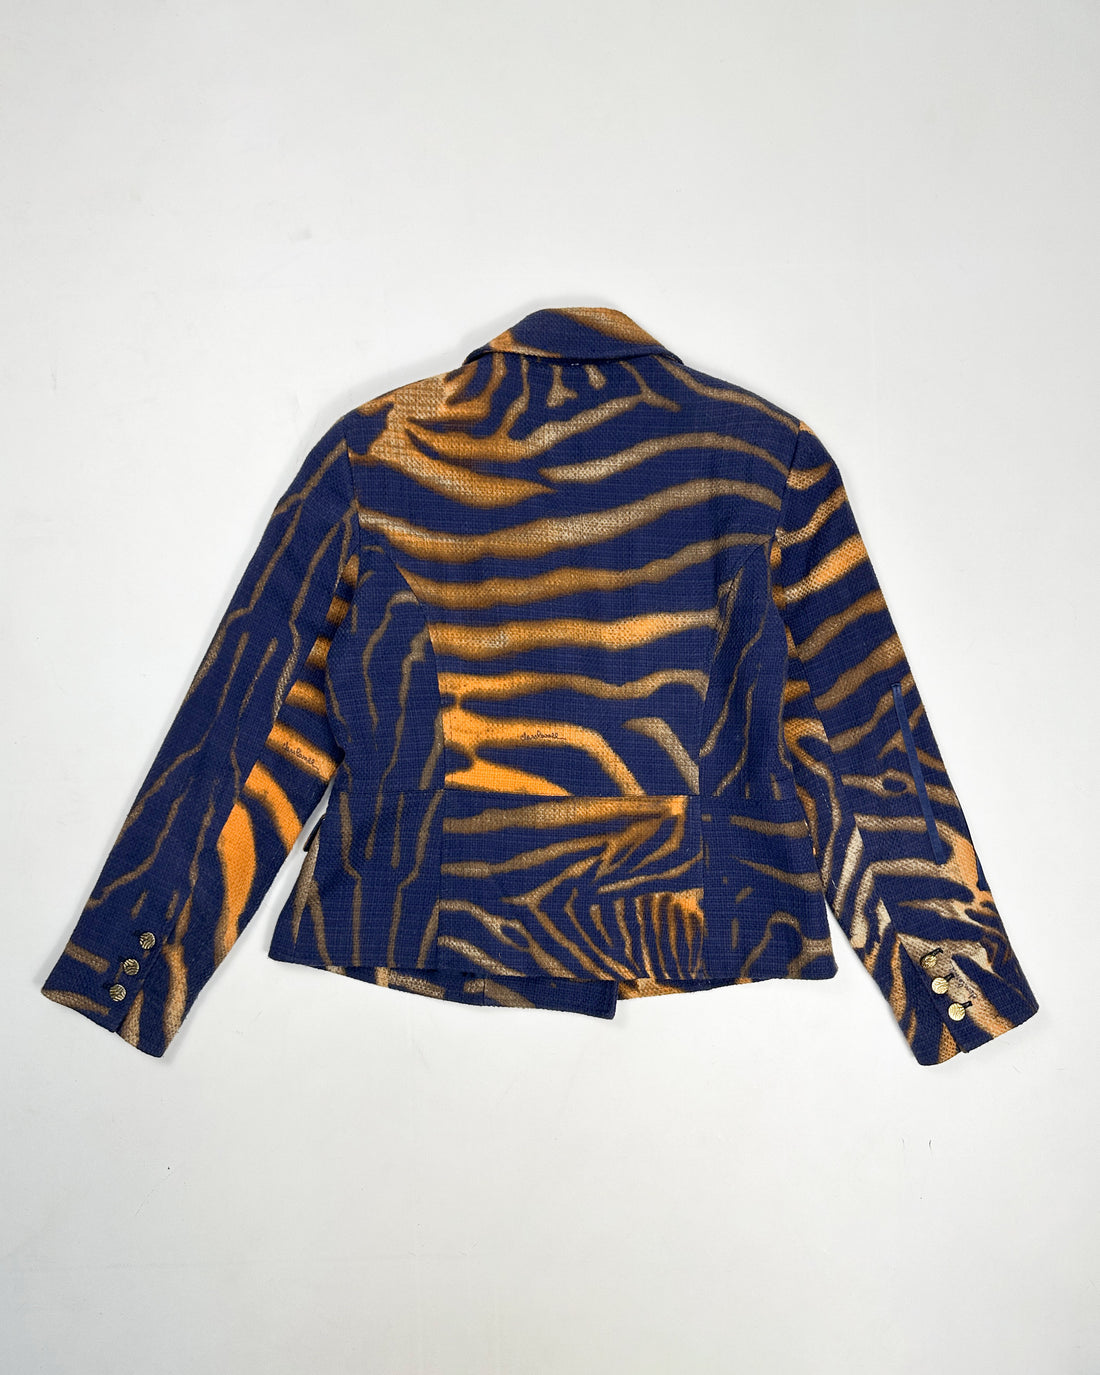 Roberto Cavalli Cheetah Blue Cross Blazer 2000's